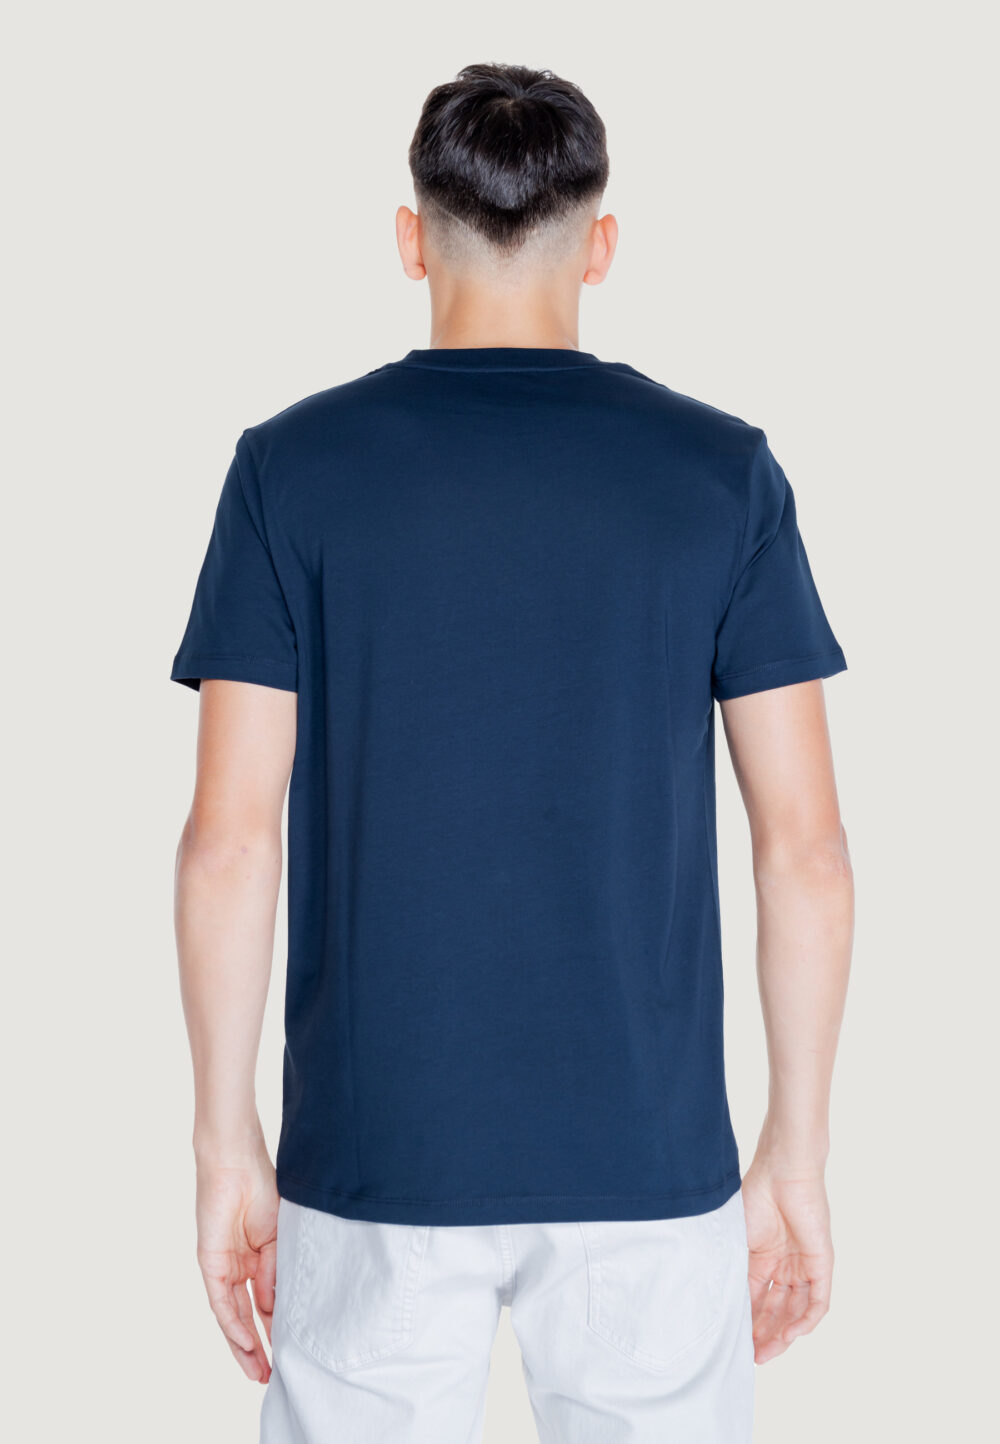 T-shirt PEUTEREY MANDERLY 01 Blue scuro - Foto 2